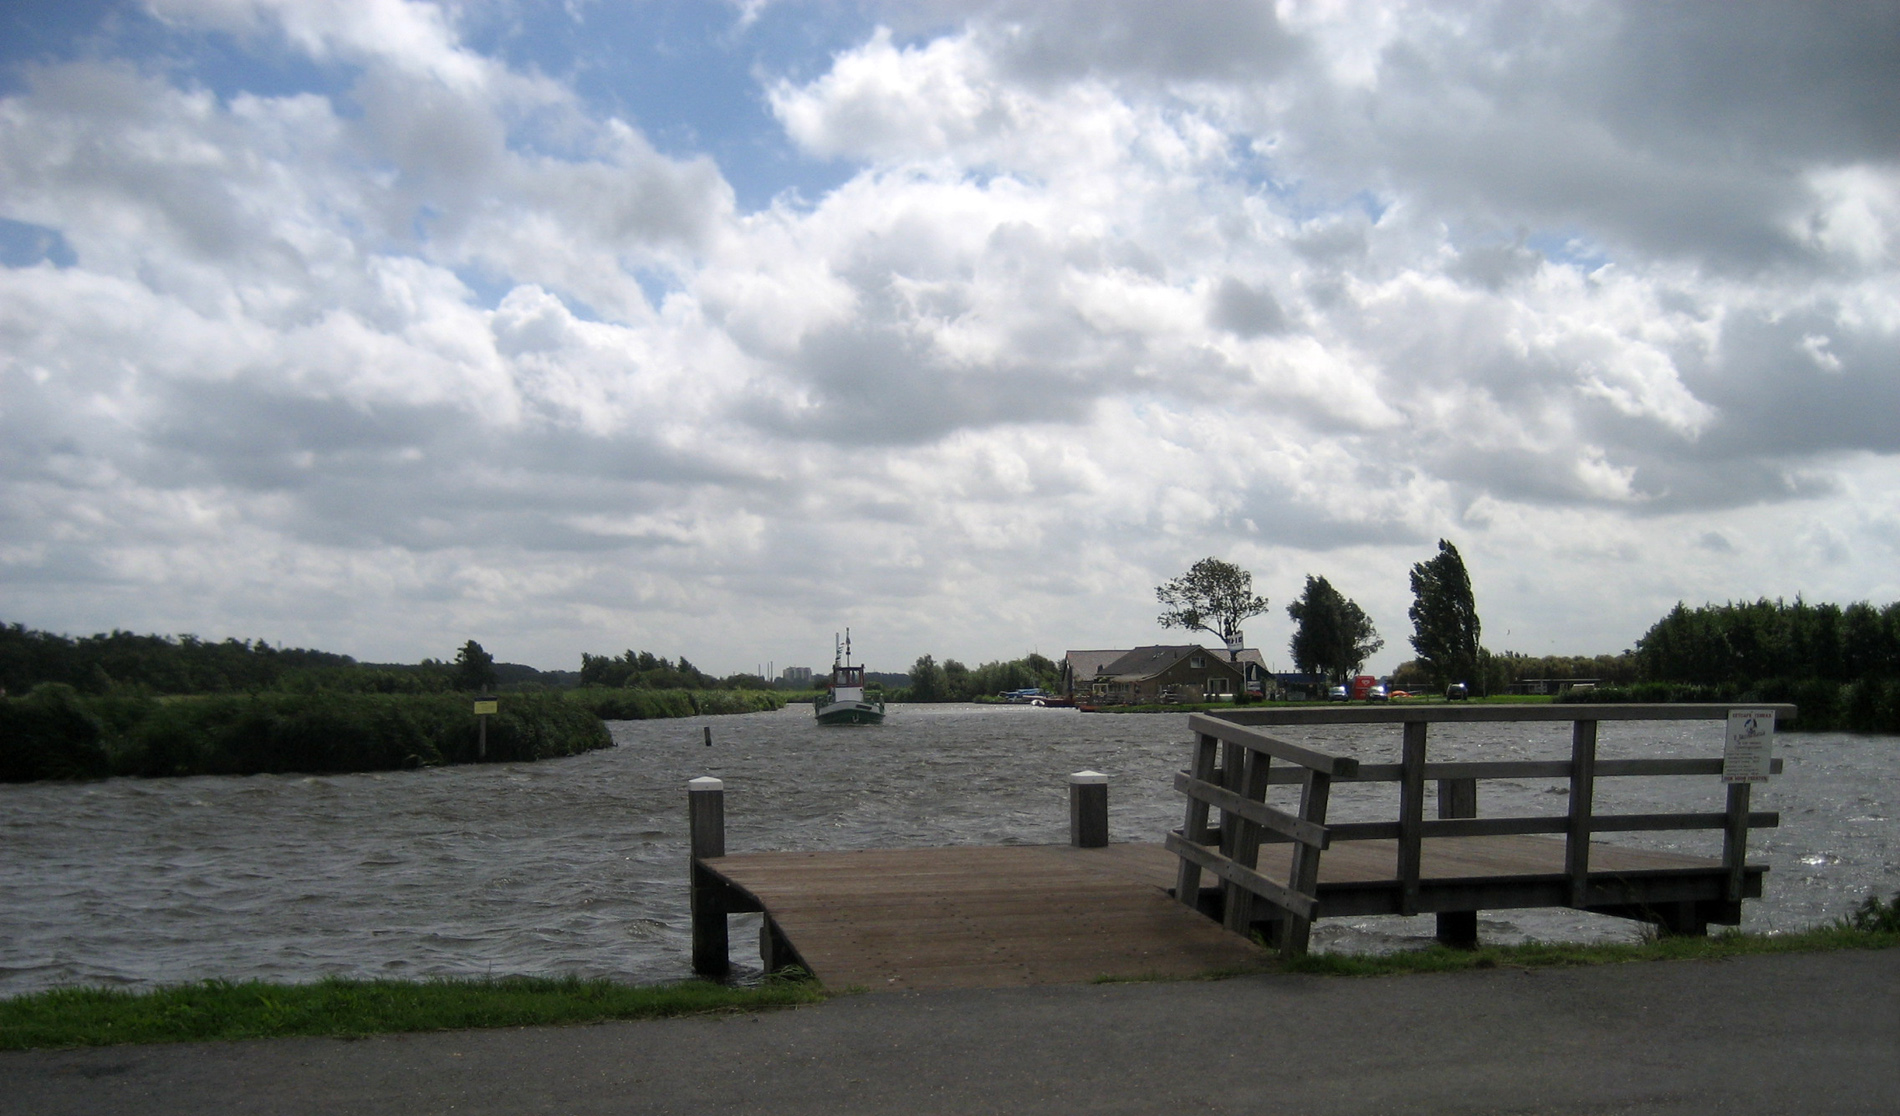 File:De Kwakel, Maasland, South Holland, Netherlands - panoramio.jpg - Wikimedia Commons